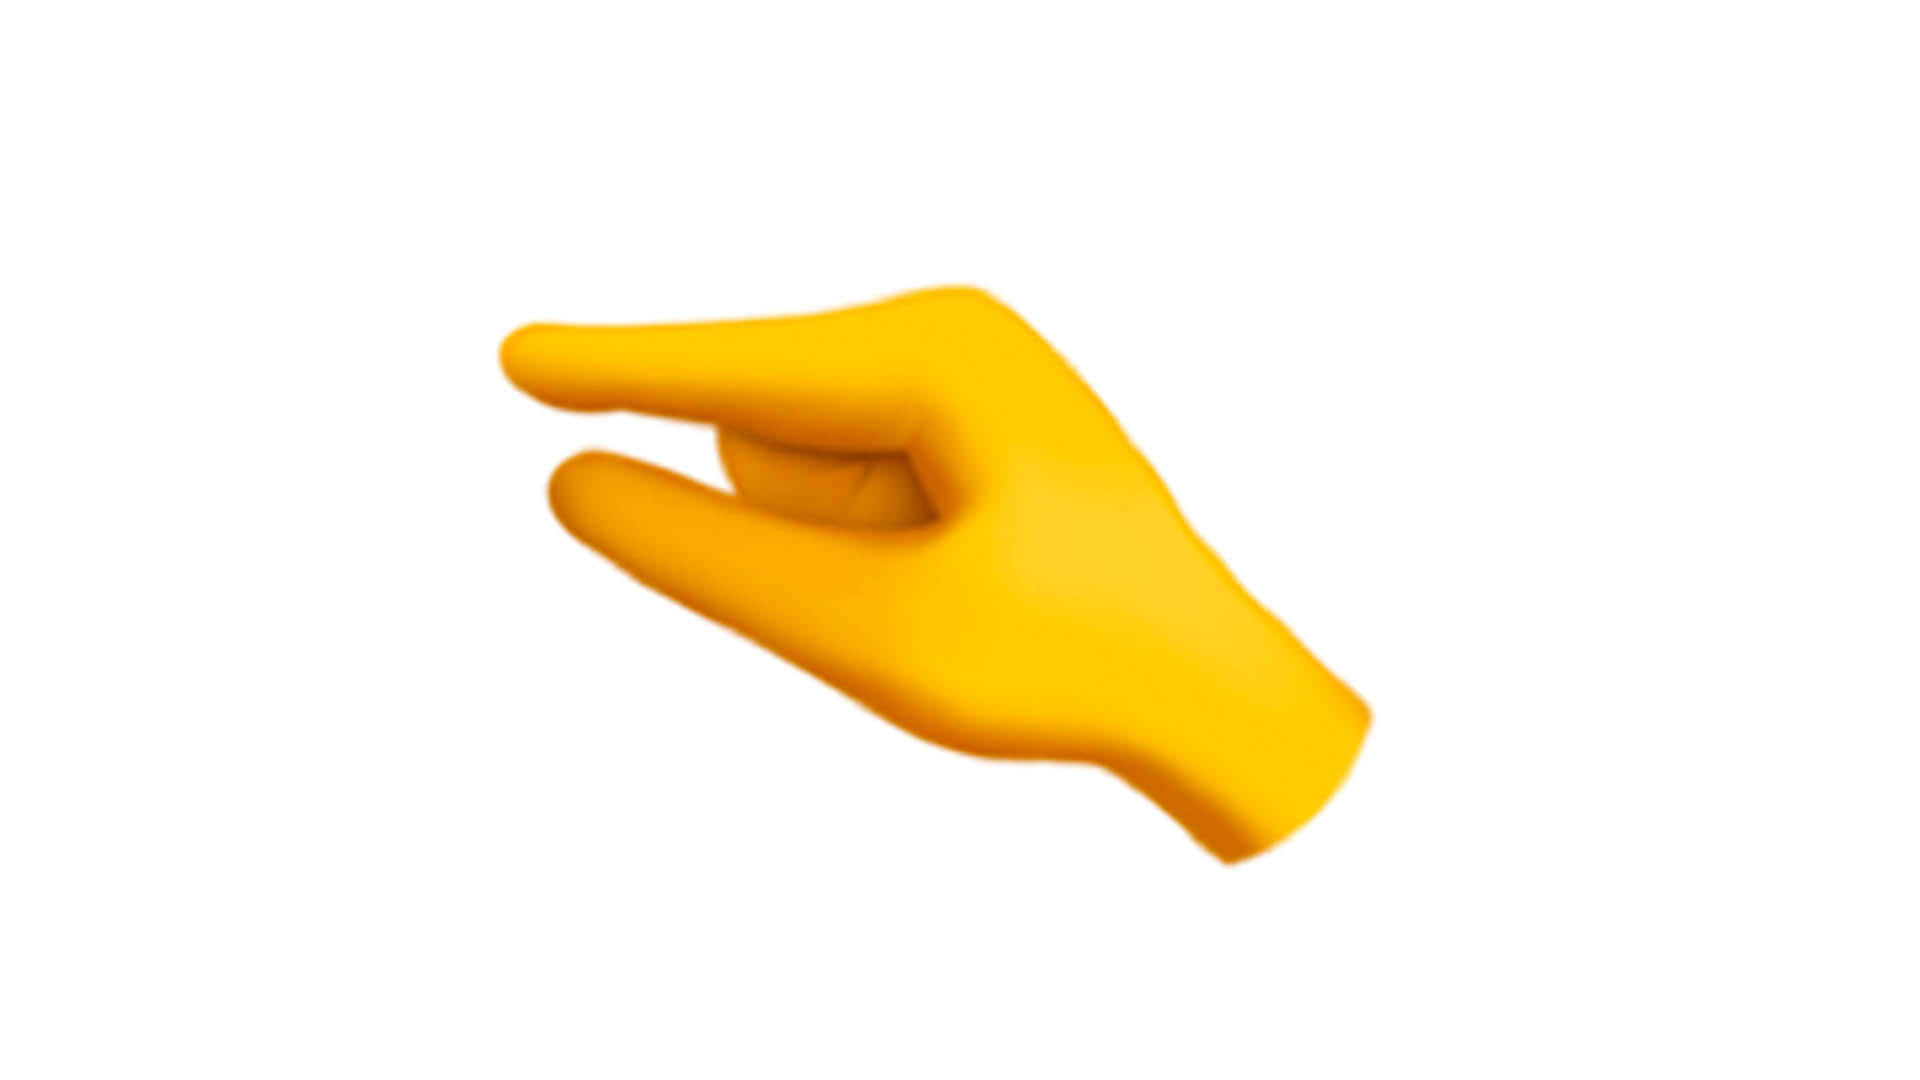 Negligible Yellow Hand Emoji Gesture Wallpaper